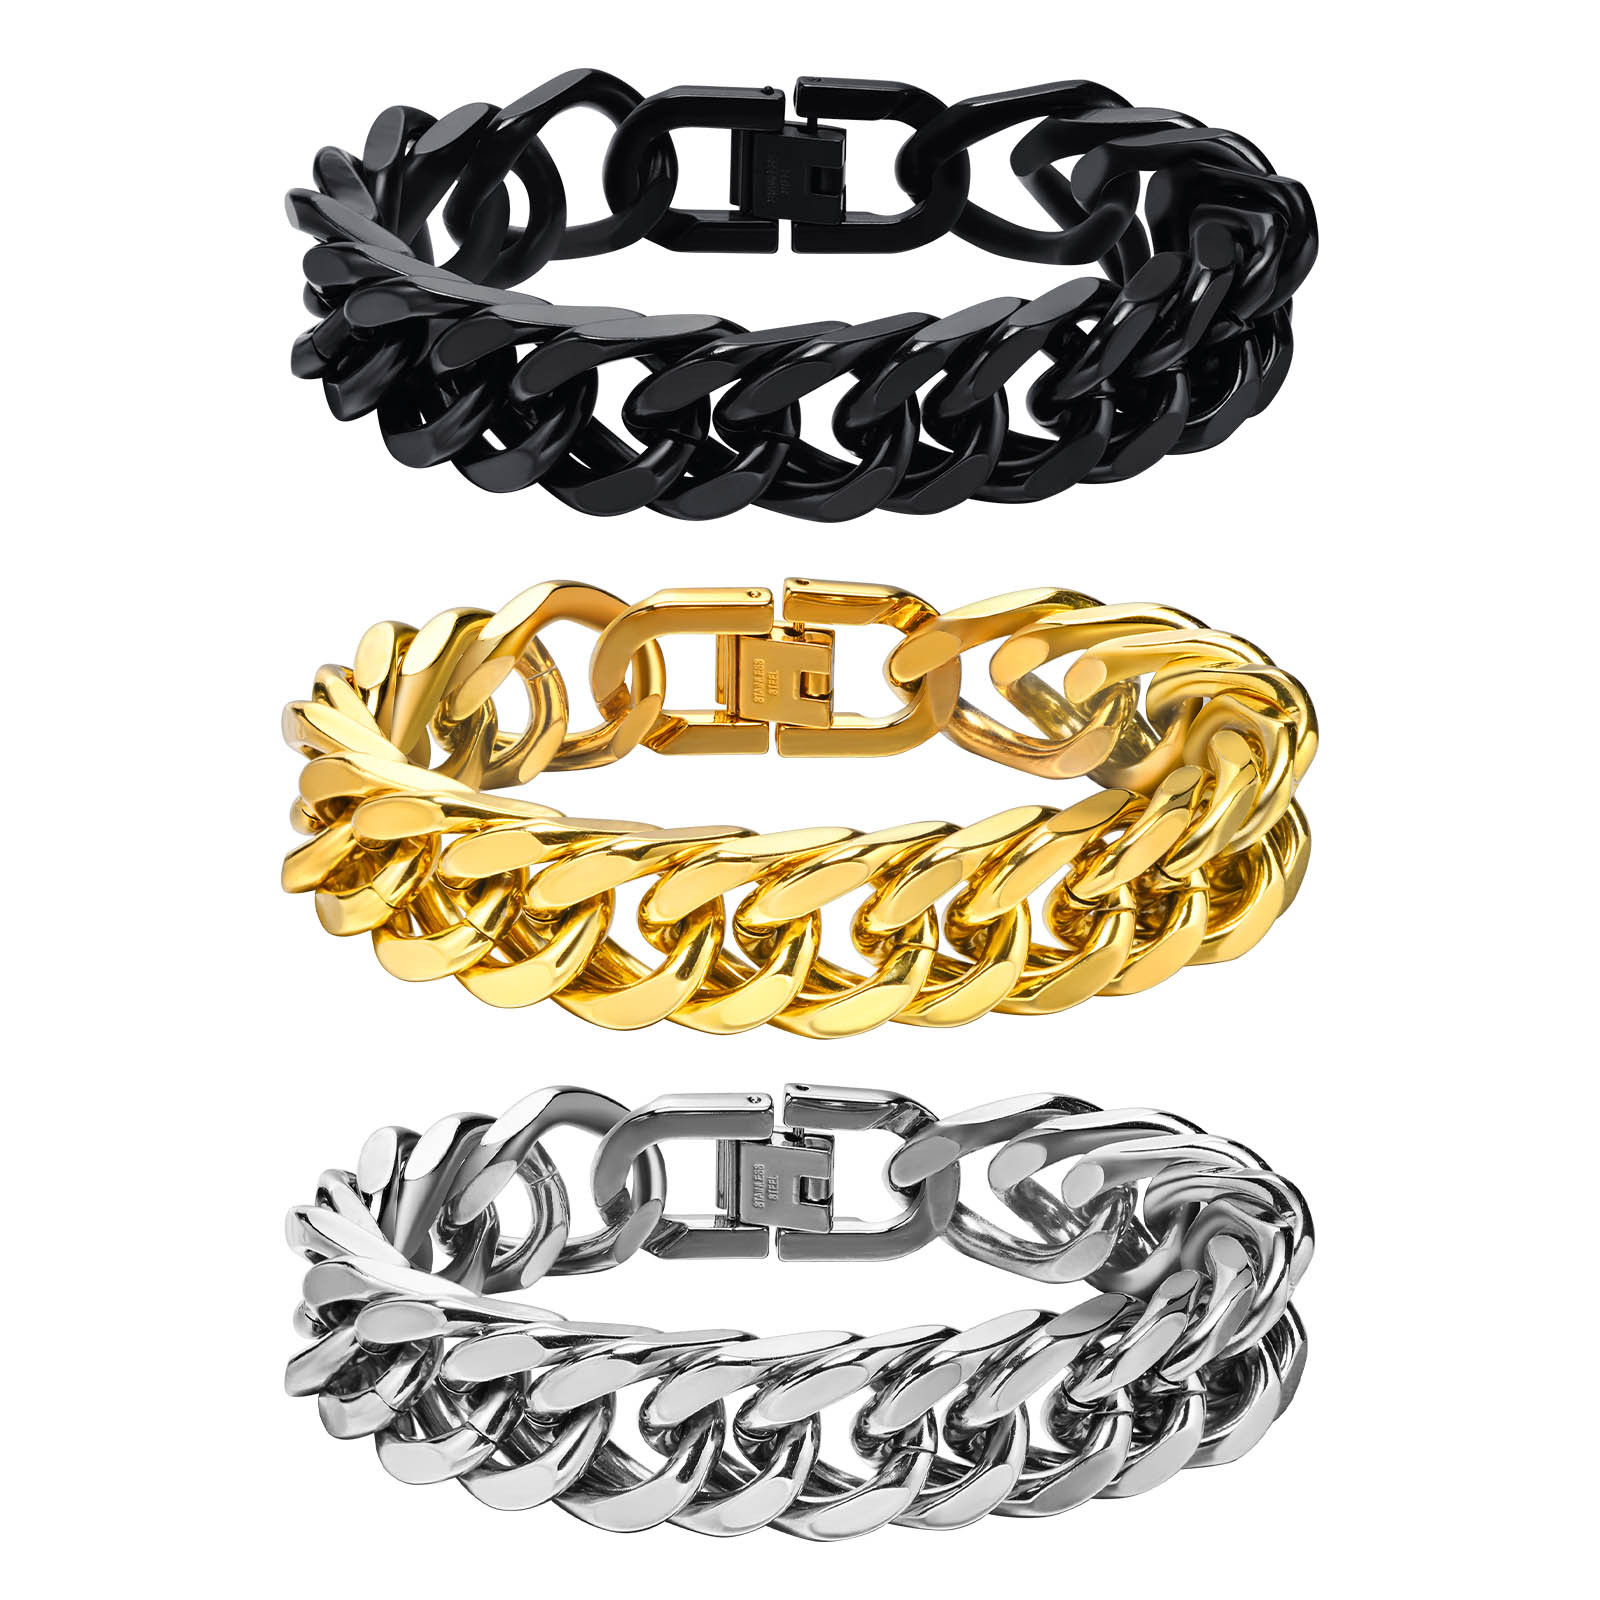 Black chain width 15MM; bracelet total length 21.5